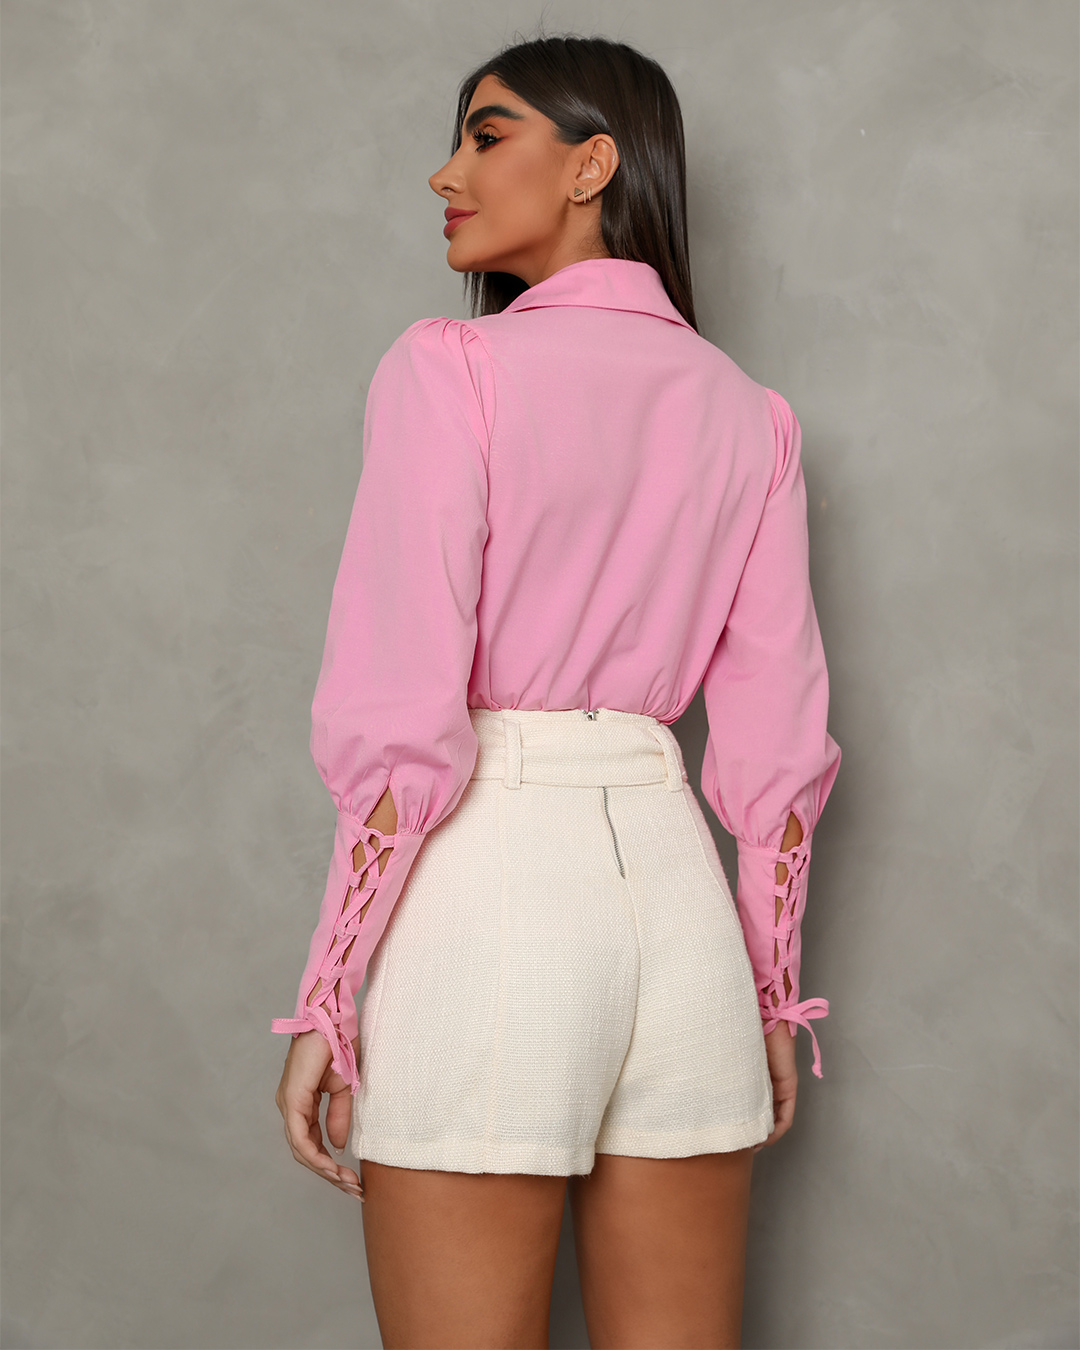 Dot Clothing - Shorts Dot Clothing Cintura Alta Offwhite - 1607OFF